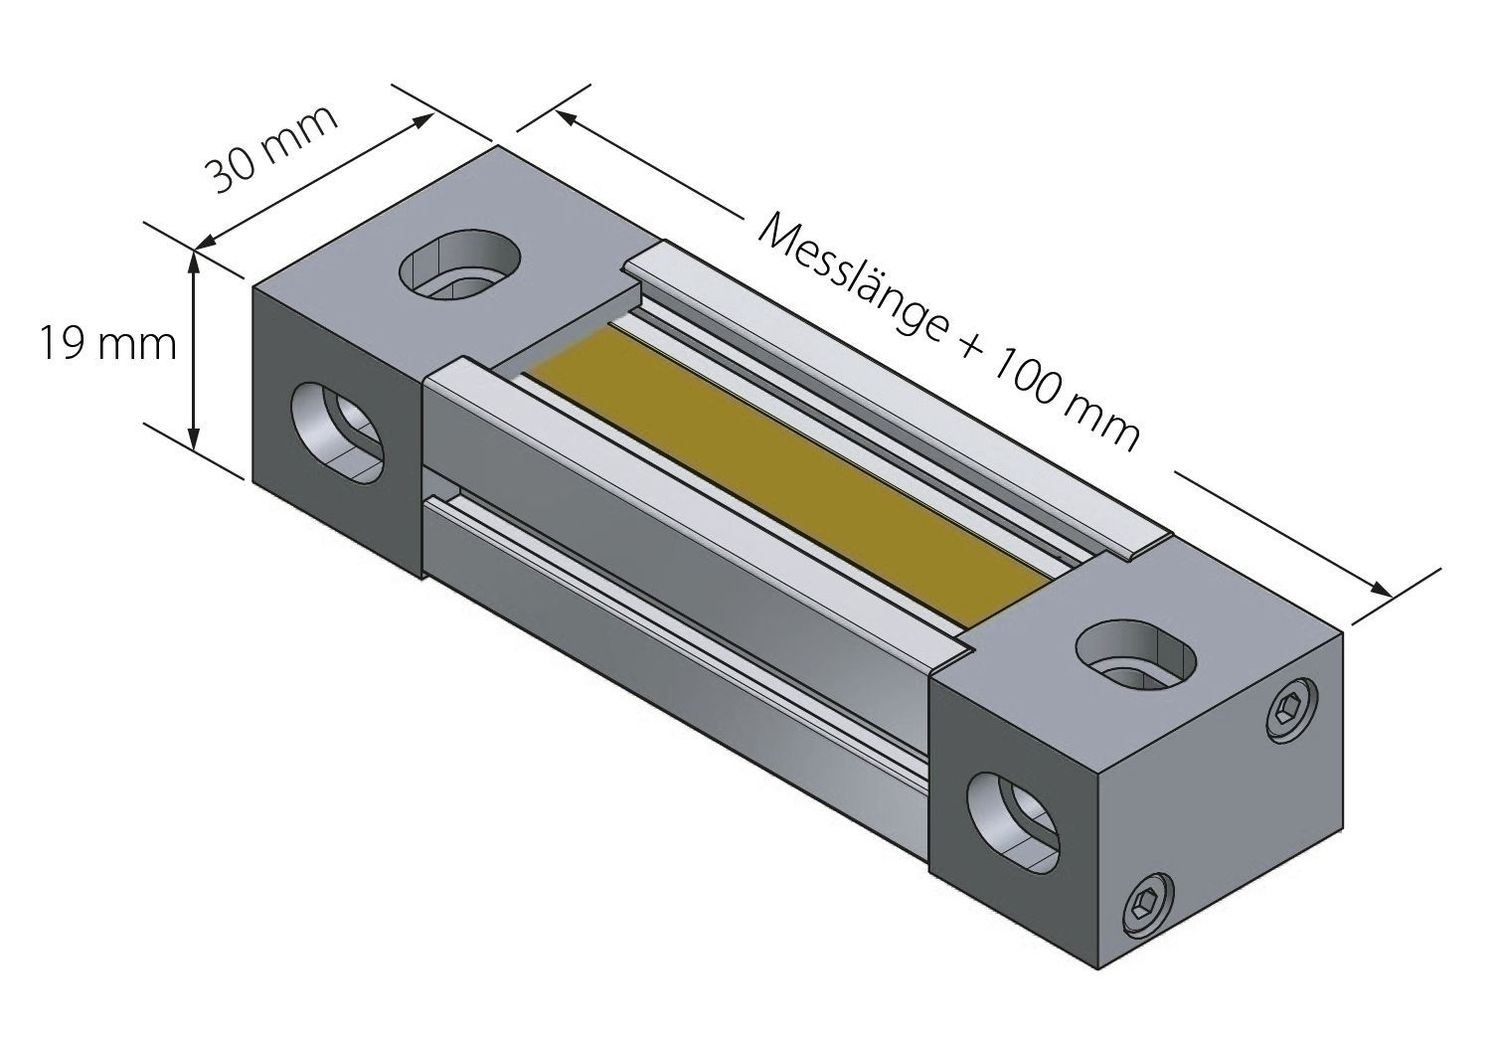 K+C Magnetmaßstab MS10A 800 mm - 5 µm | Verfahrweg 820 mm